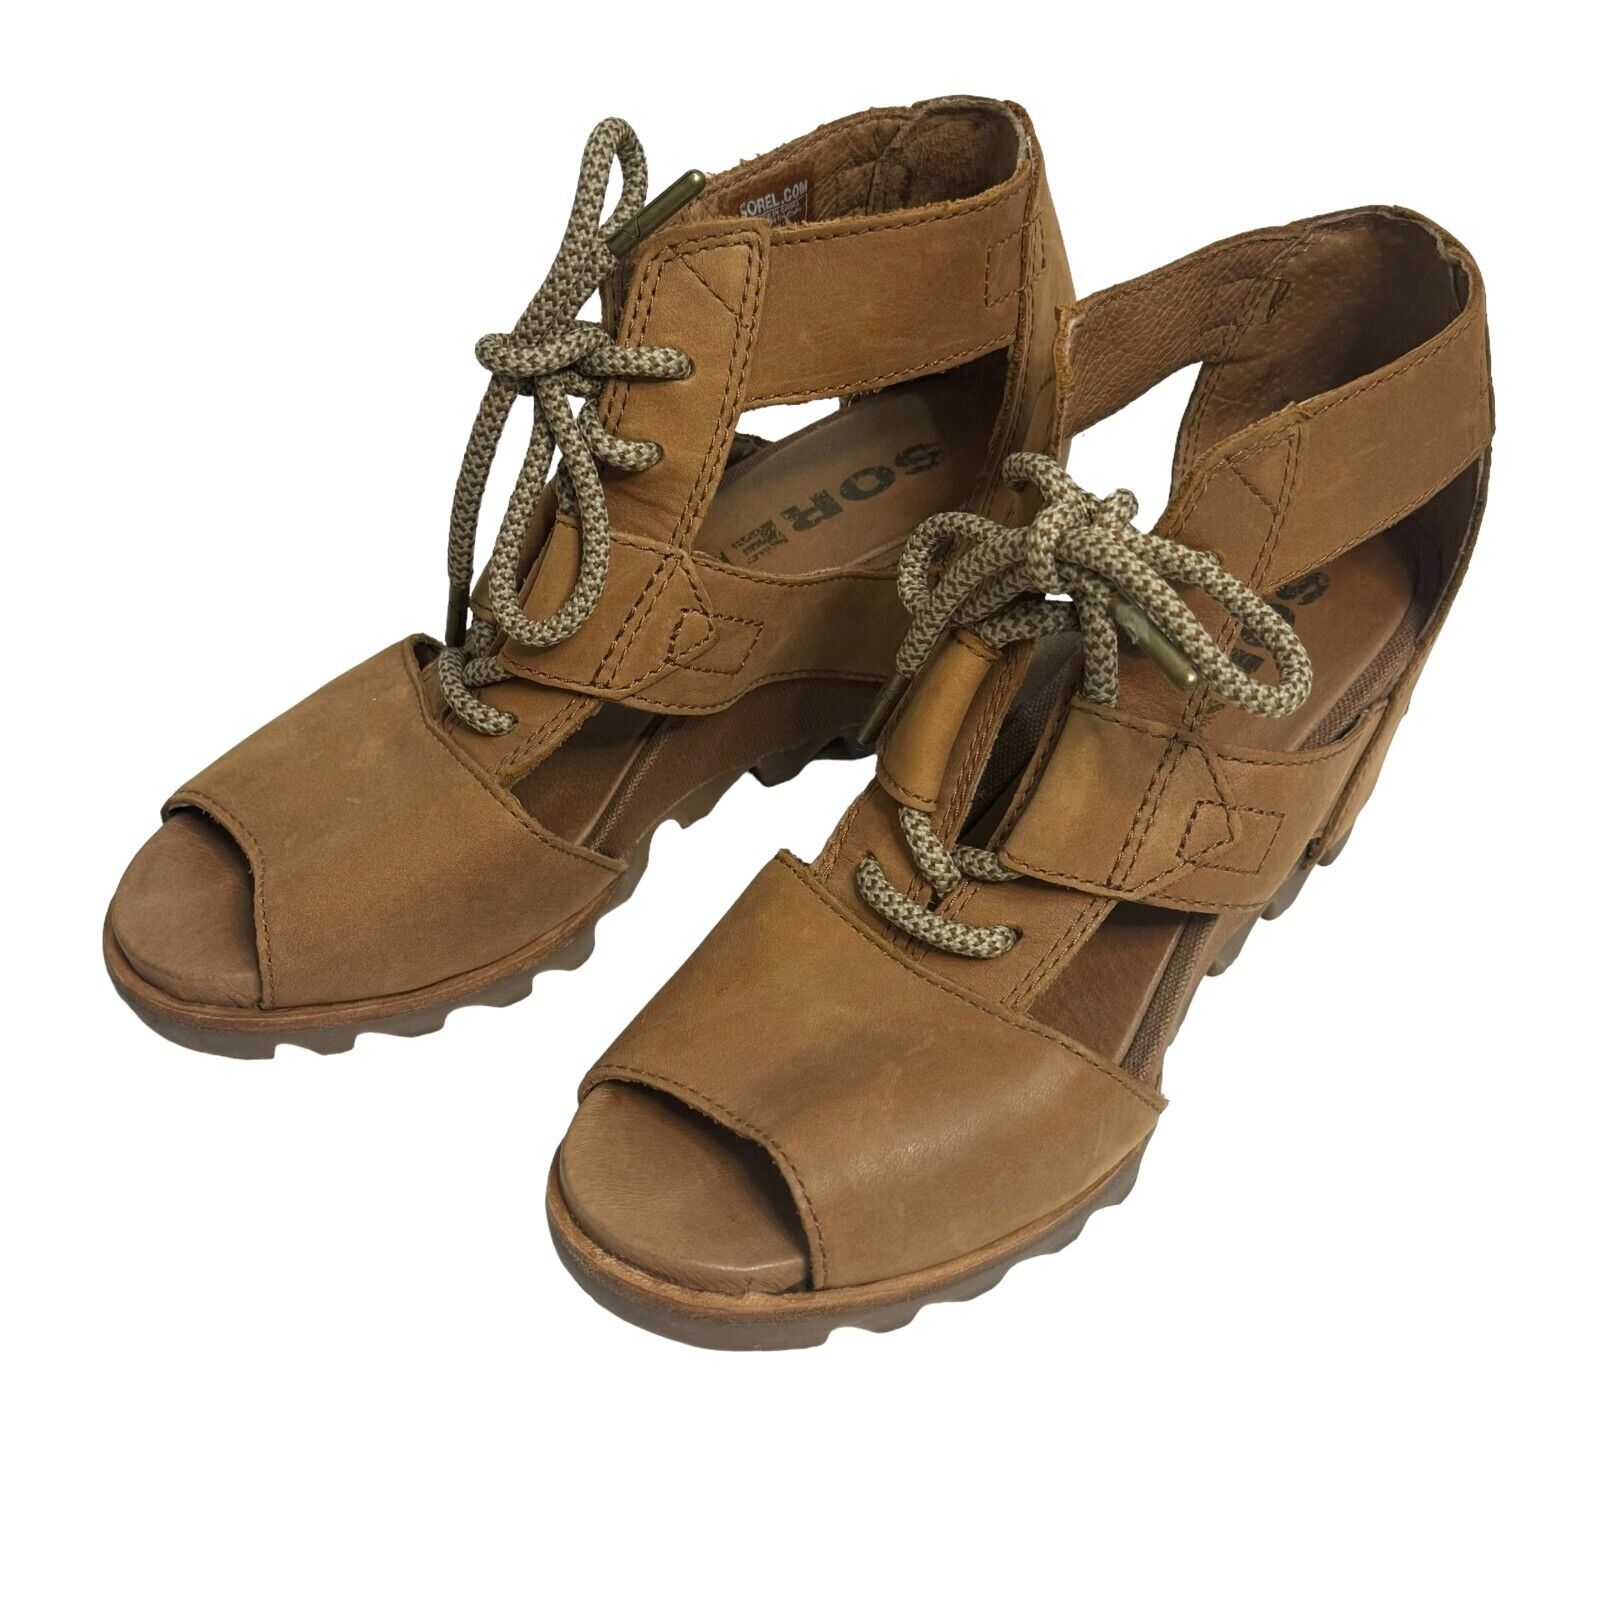 Sorel Joanie II Camel Leather Wedge Heel Strappy Sandals Size 7.5 NL2914-224